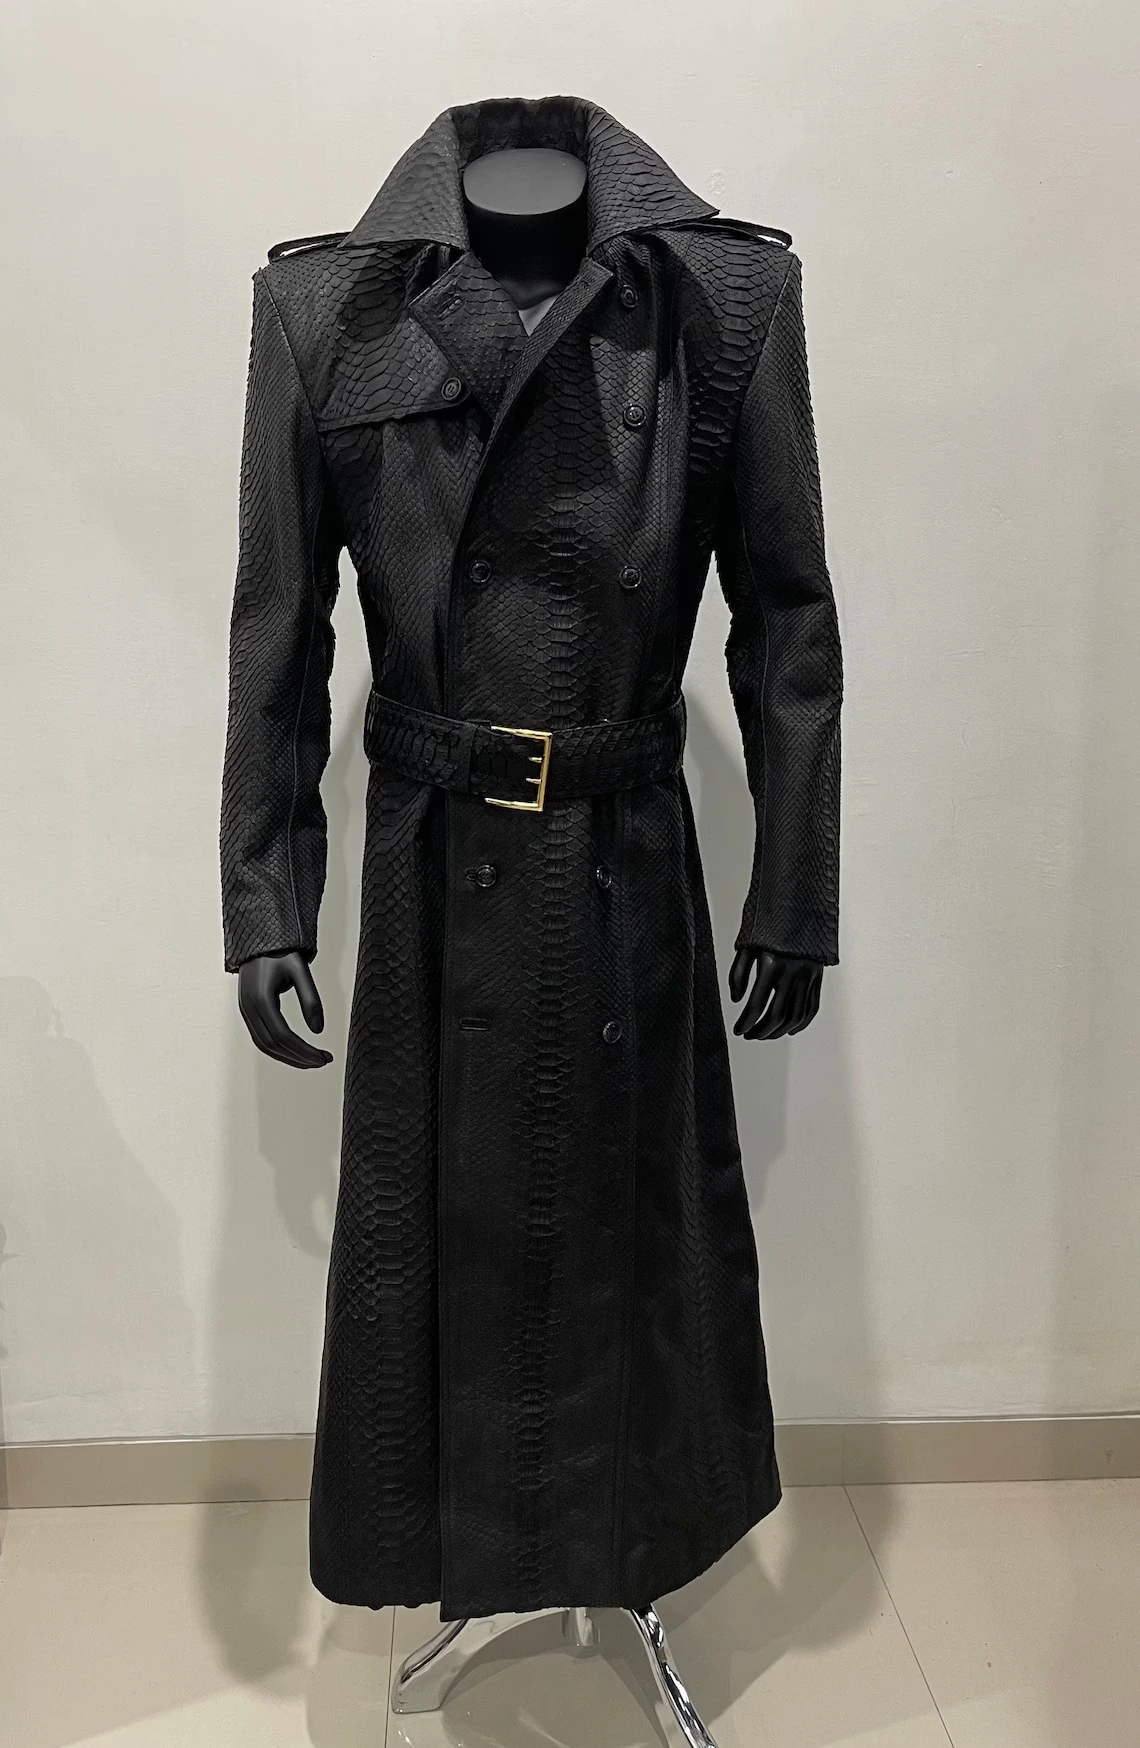 Men’s Snakeskin Python Leather Trench Coat